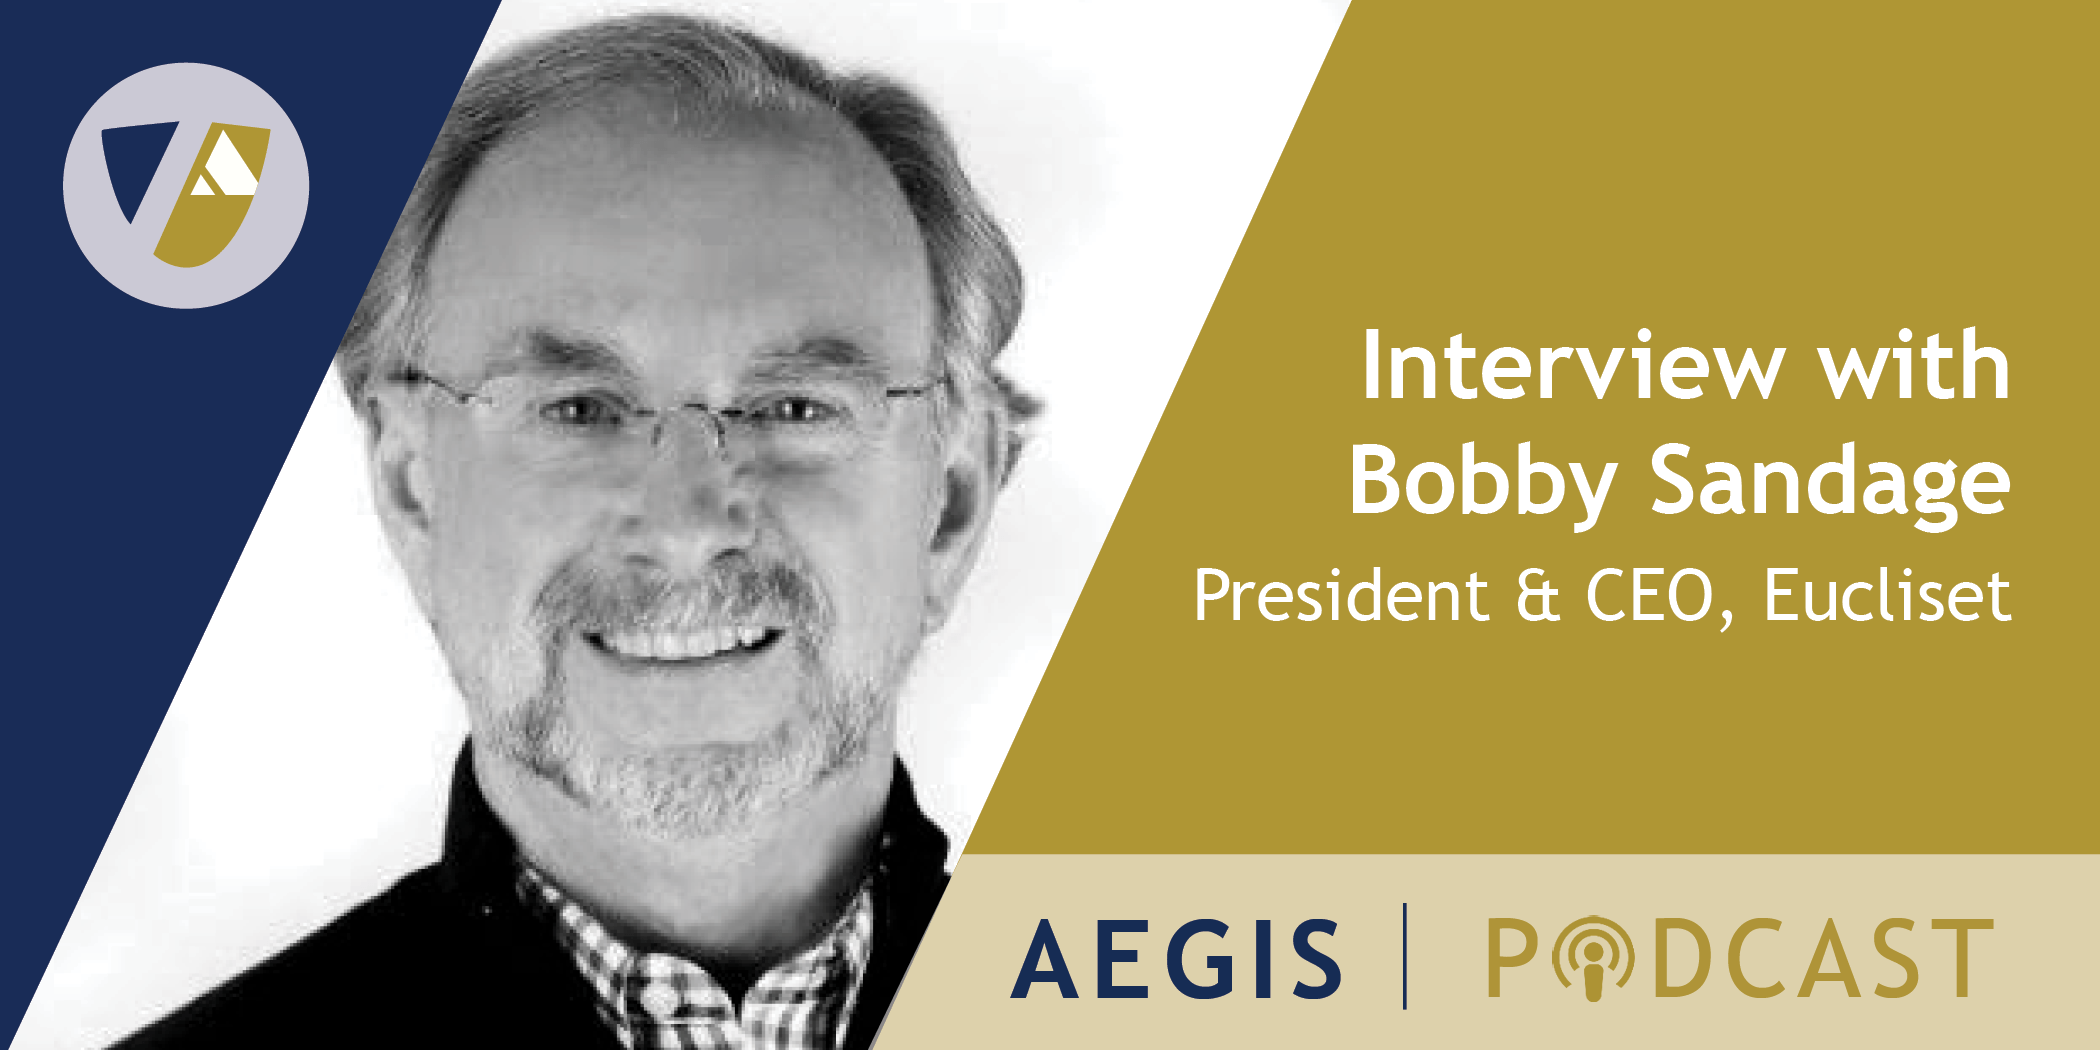 The AEGIS Podcast: Interview with Bobby Sandage, Entrepreneur